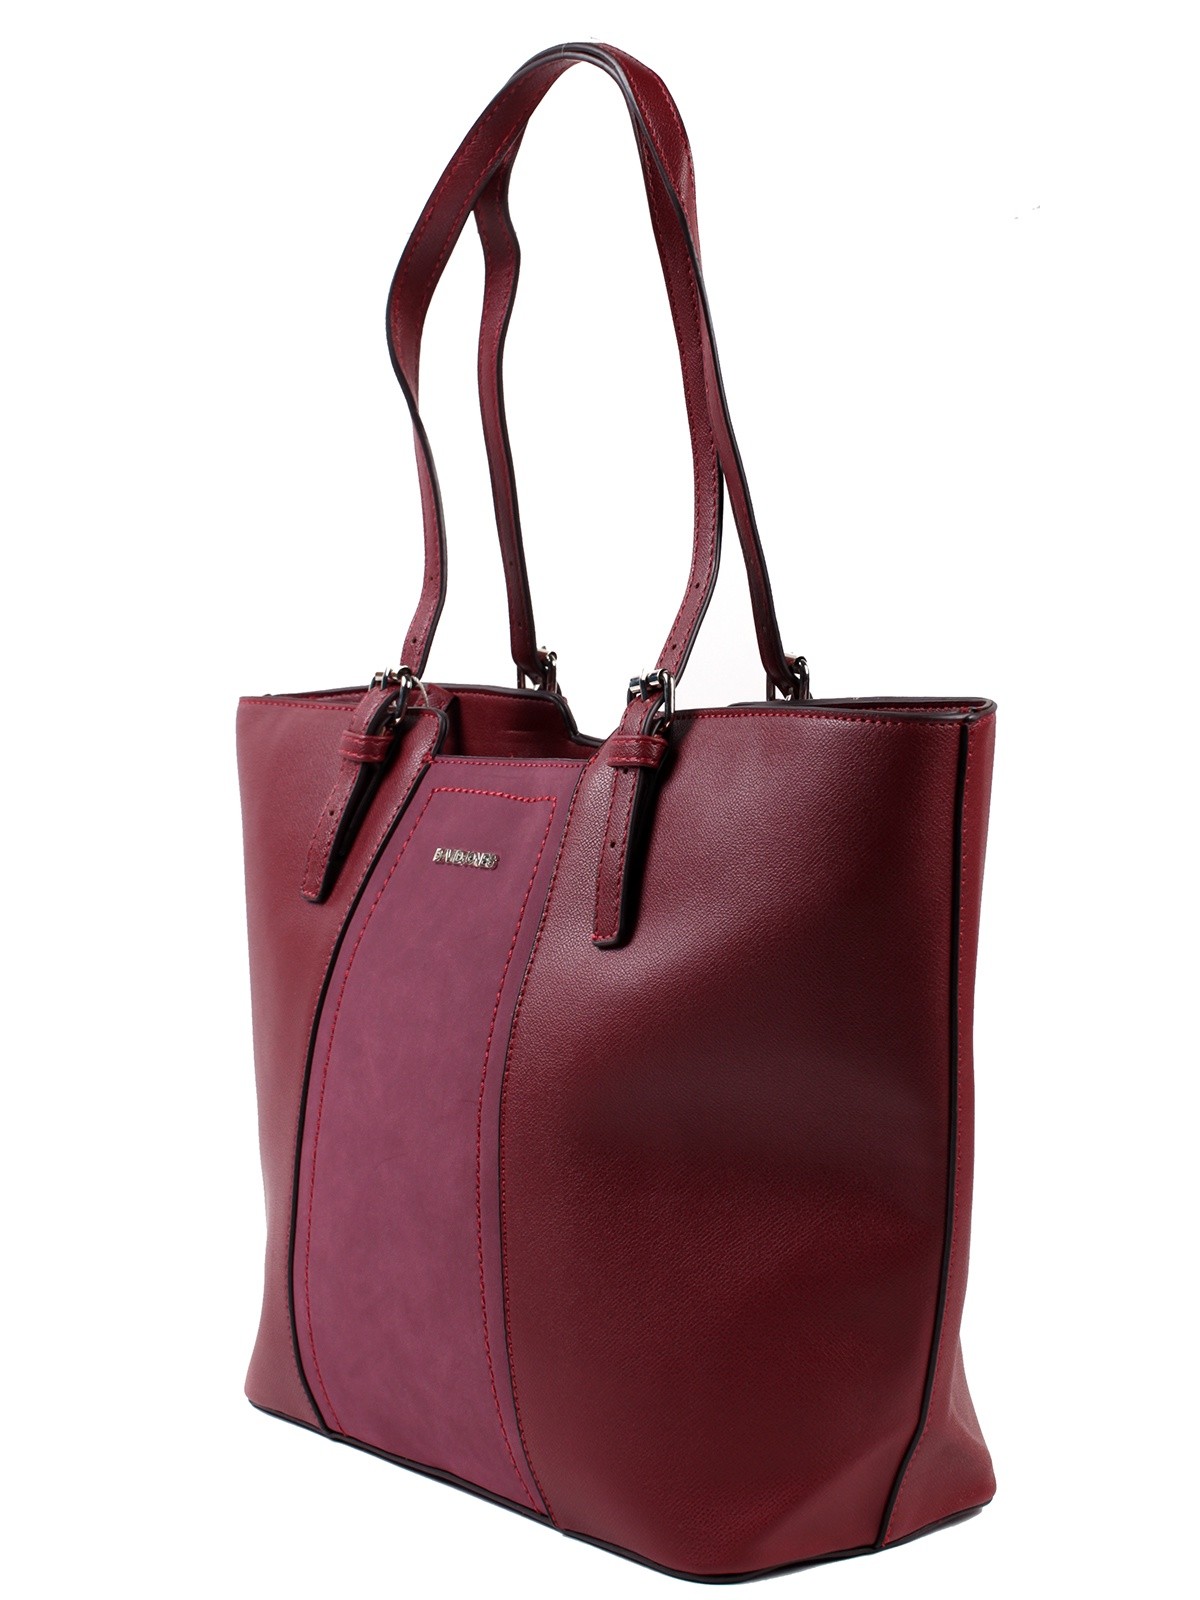 Wholesaler David Jones: handbags